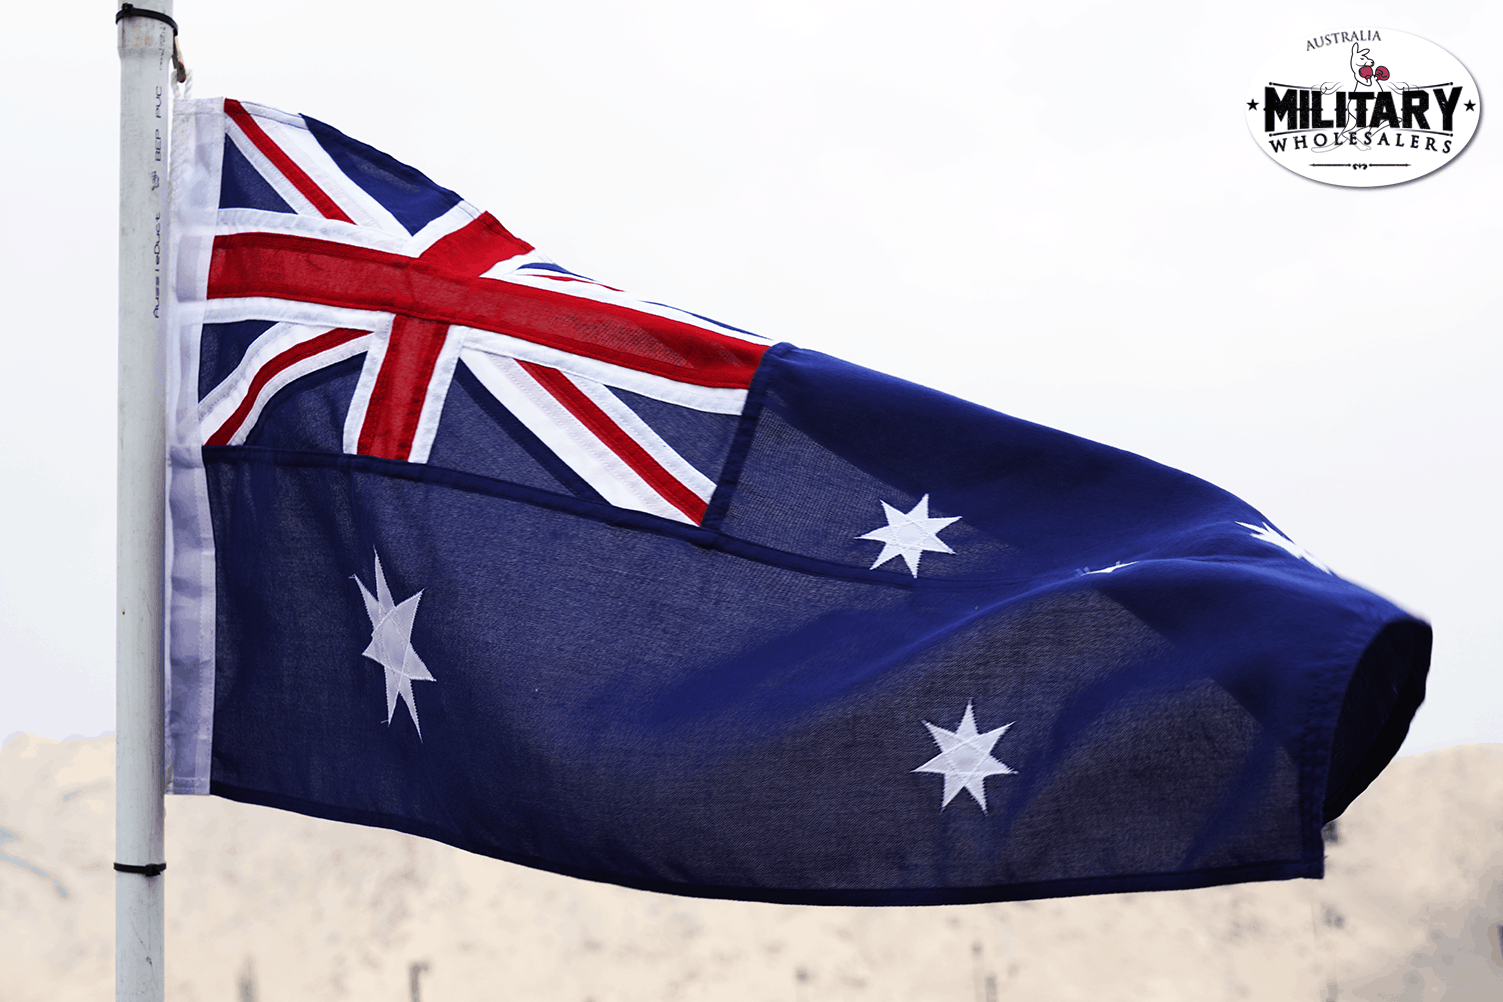 quality-mini-australian-flag-military-wholesales